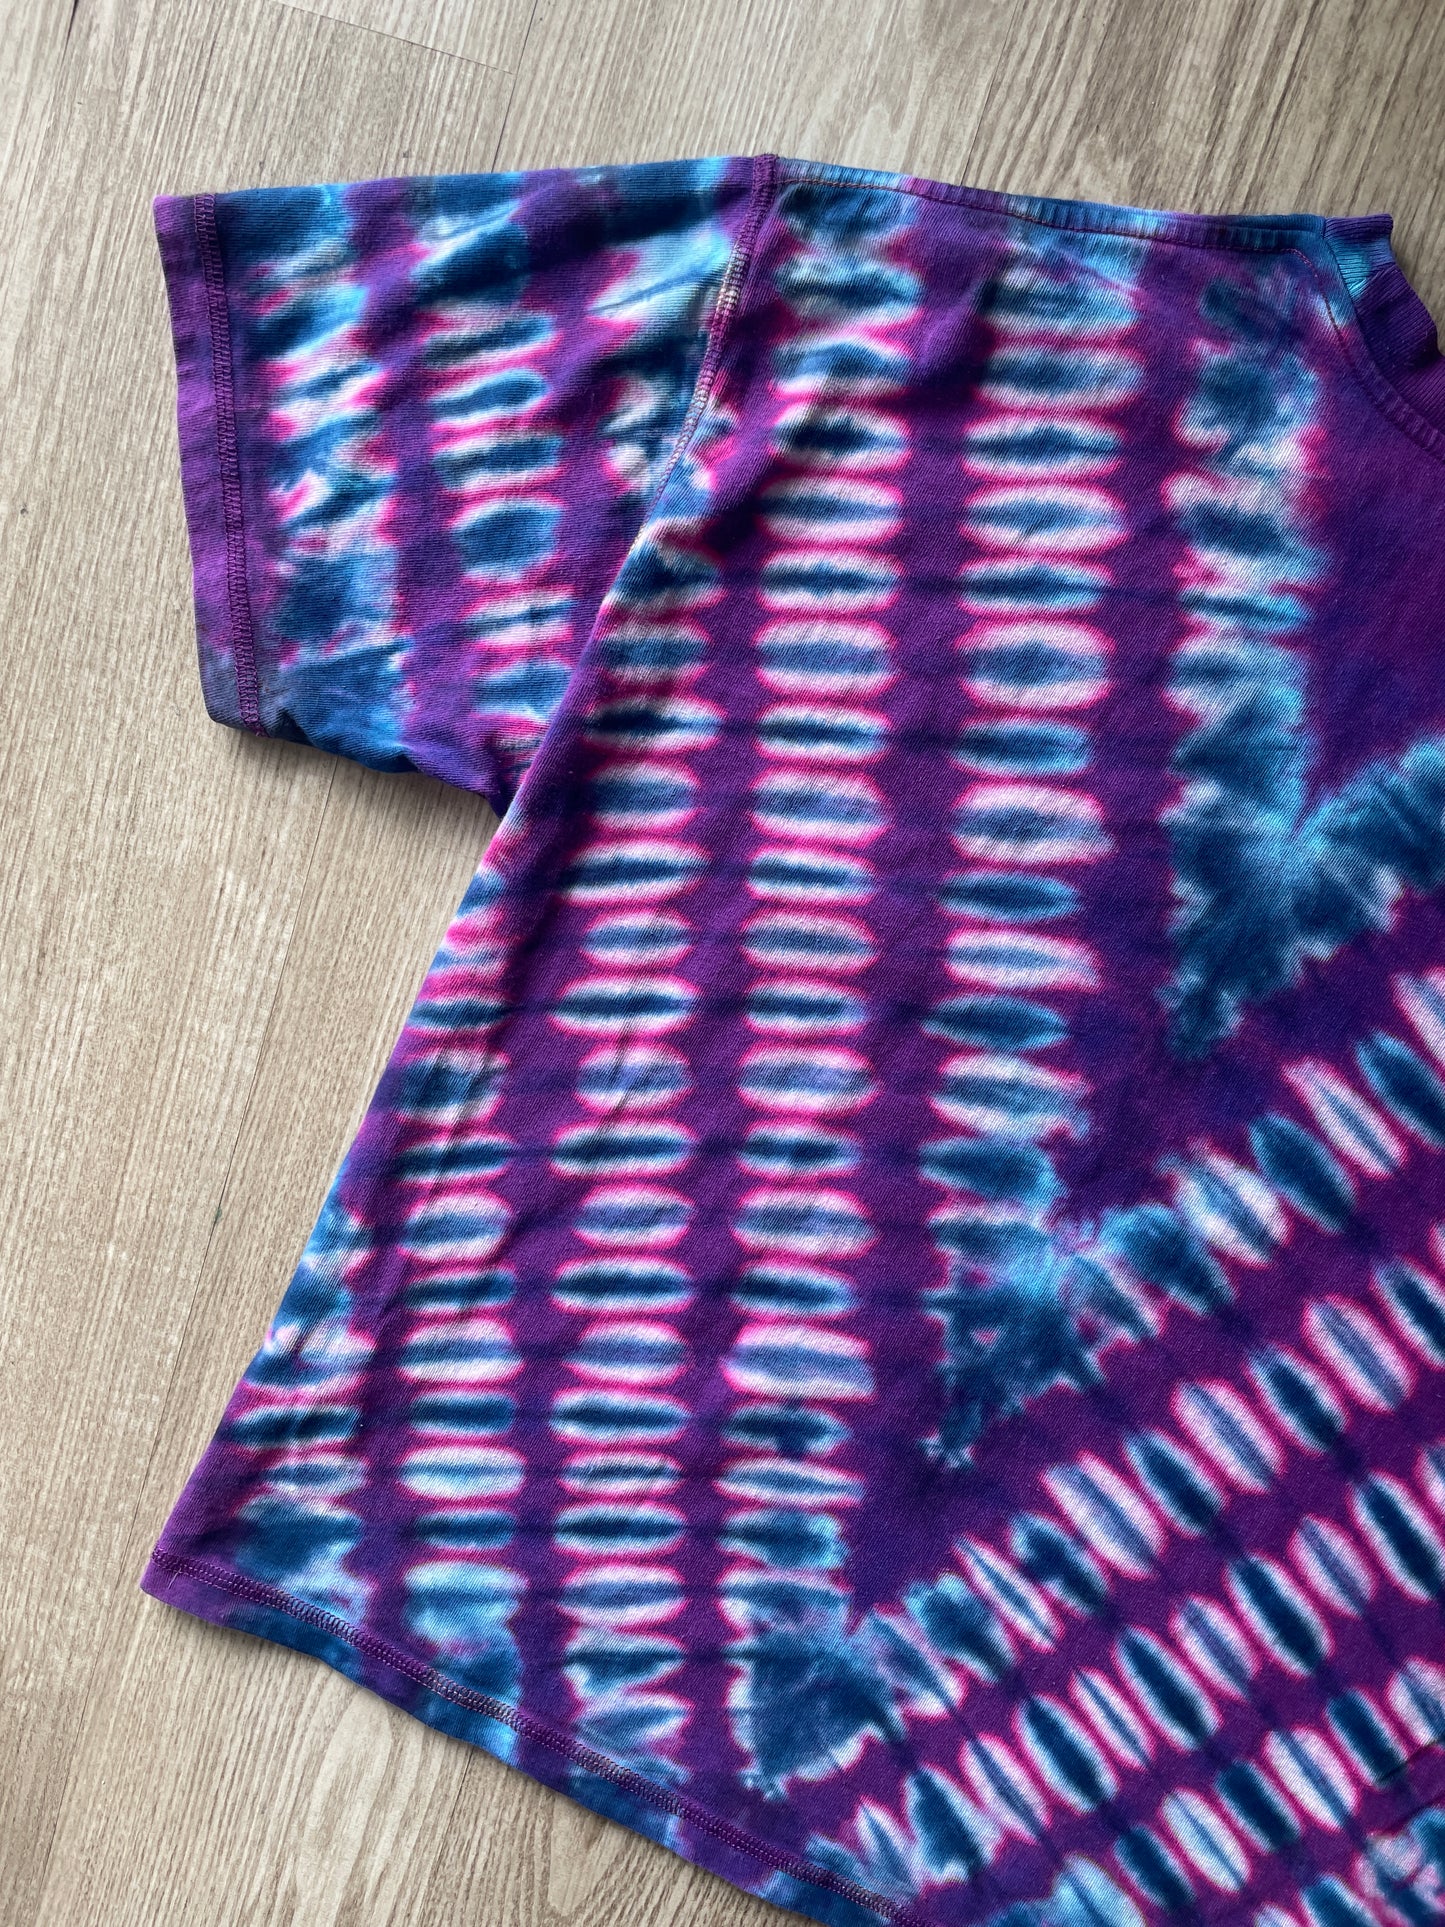 MEDIUM Women’s Climbing Shoe Reverse Handmade Tie Dye T-Shirt | One-Of-a-Kind Purple and Pink Short Sleeve